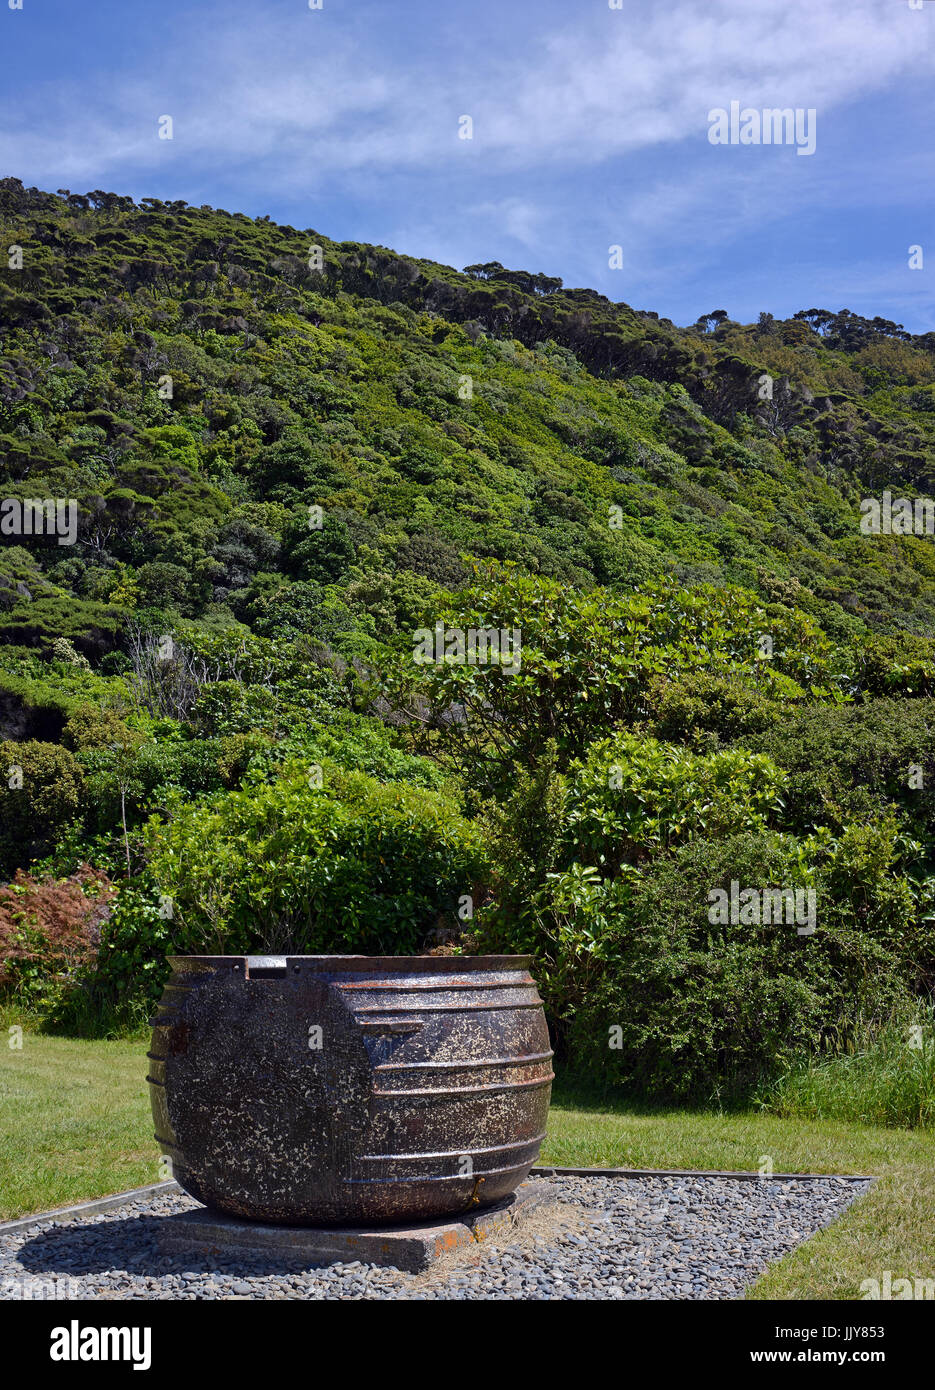 Historic Whaling Pot on Kapiti Island Bird Santuary, New Zealand. In the background is the pristine native bush. Stock Photo